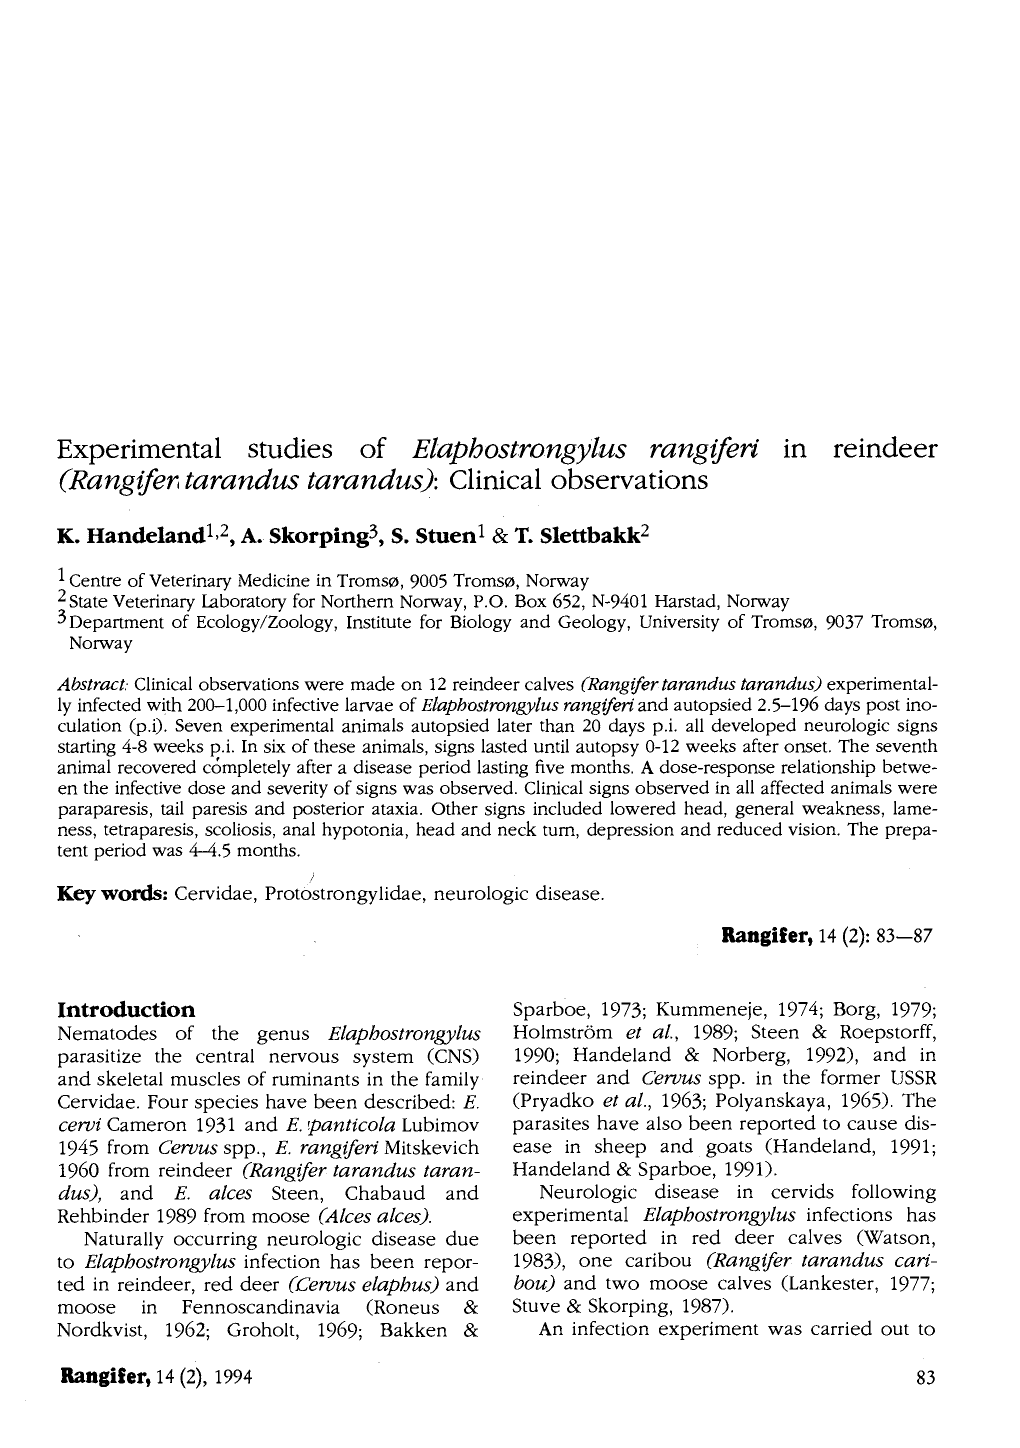 Experimental Studies of Elaphostrongylus Rangiferi in Reindeer (Rangifer Tarandus Tarandus): Clinical Observations